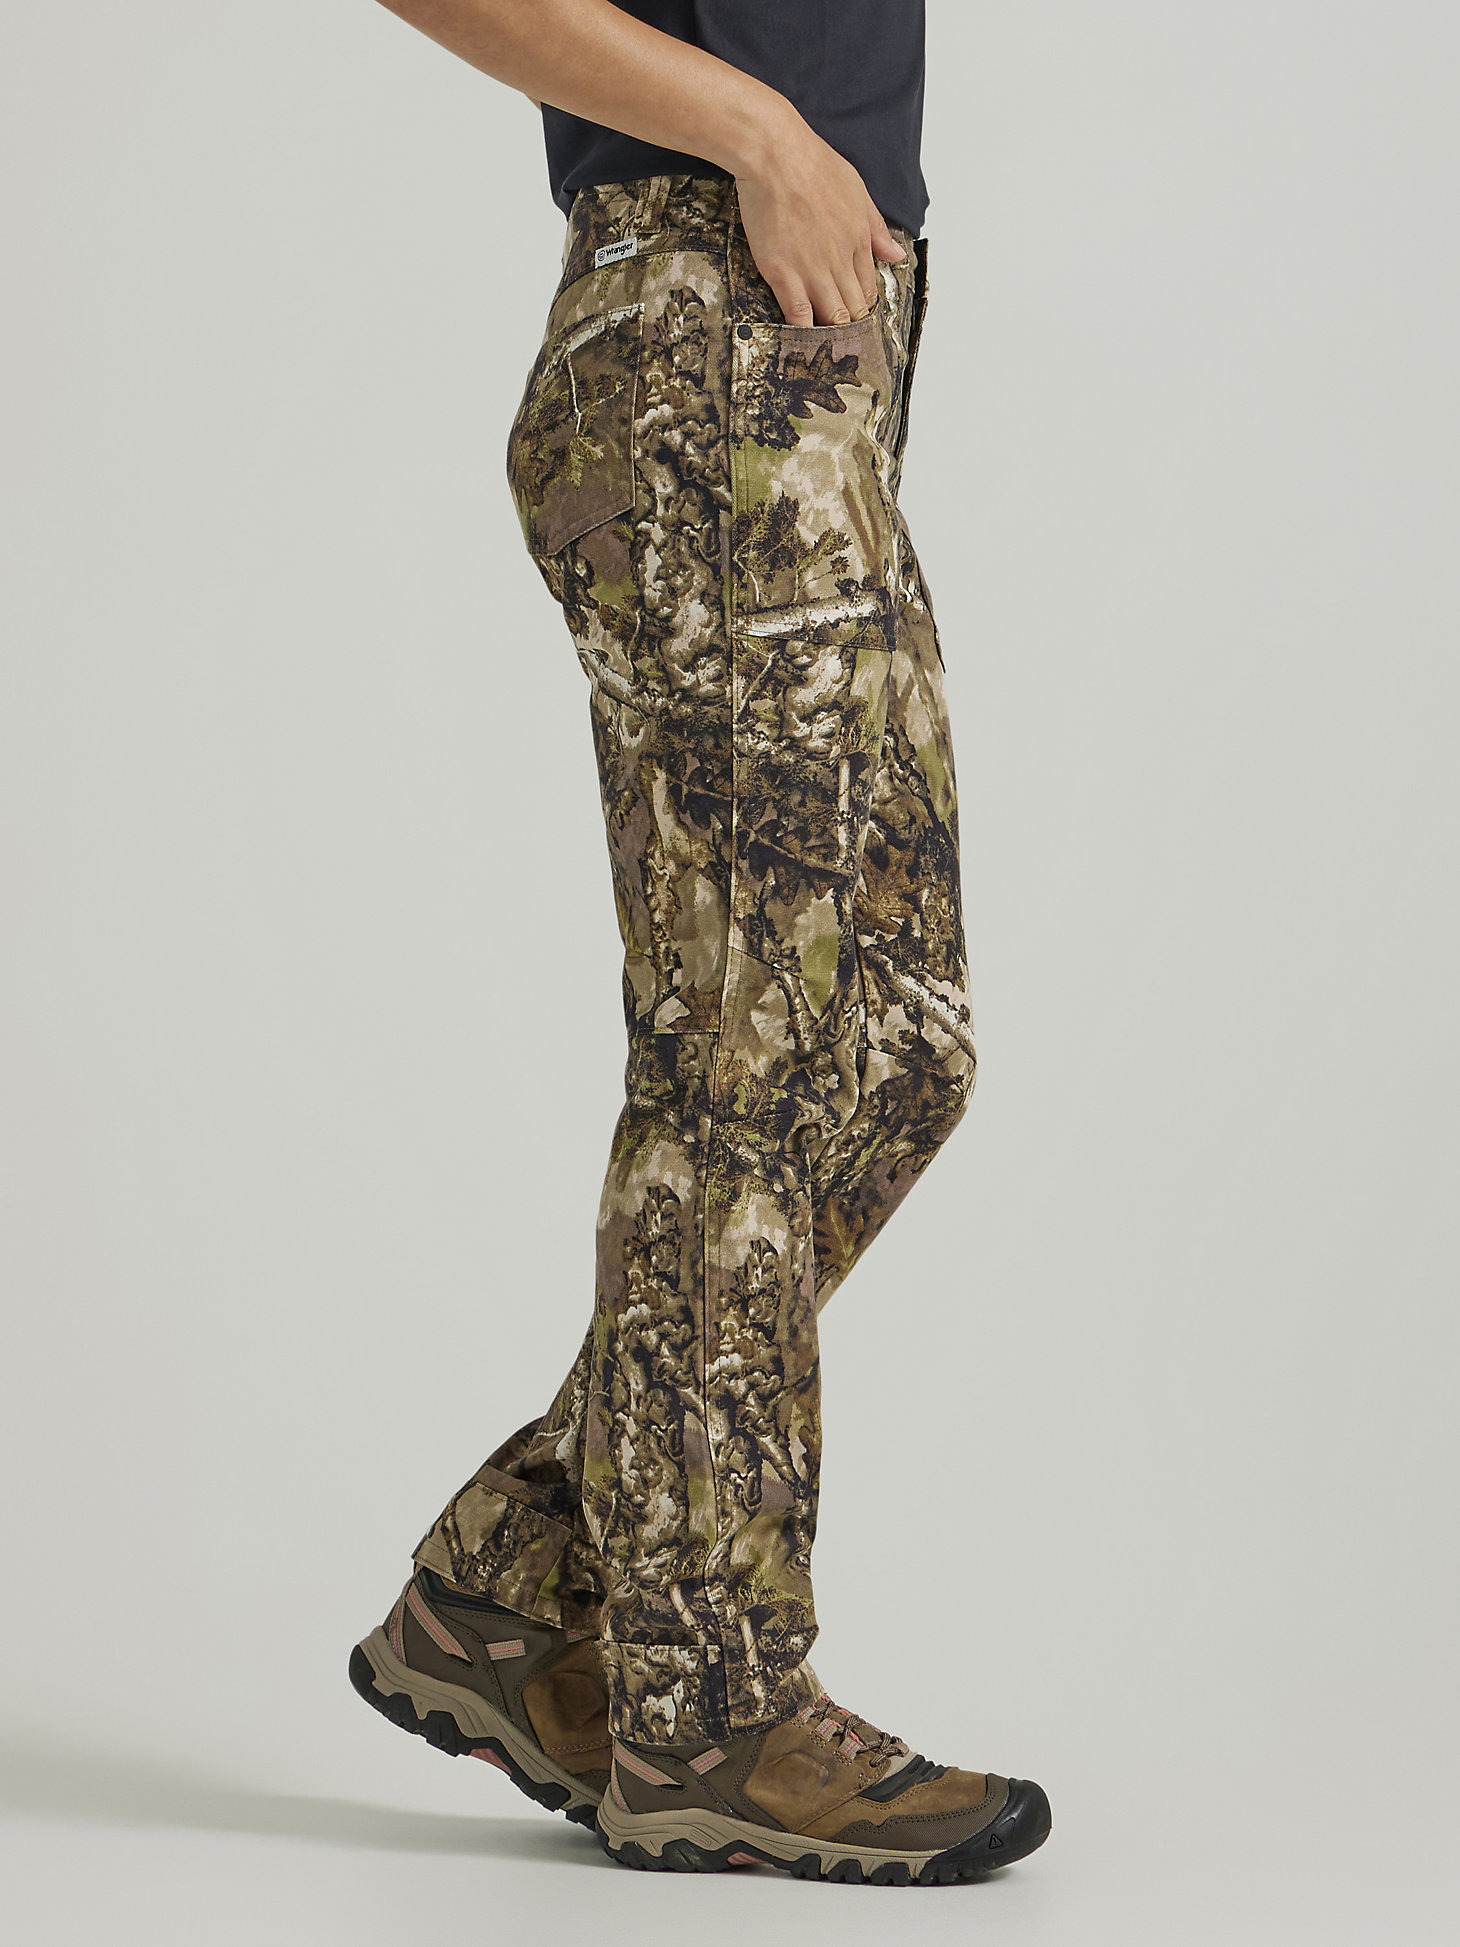 ATG Wrangler Hunter™ Women's Sierra Slim Pant in Warmwoods Camo alternative view 3